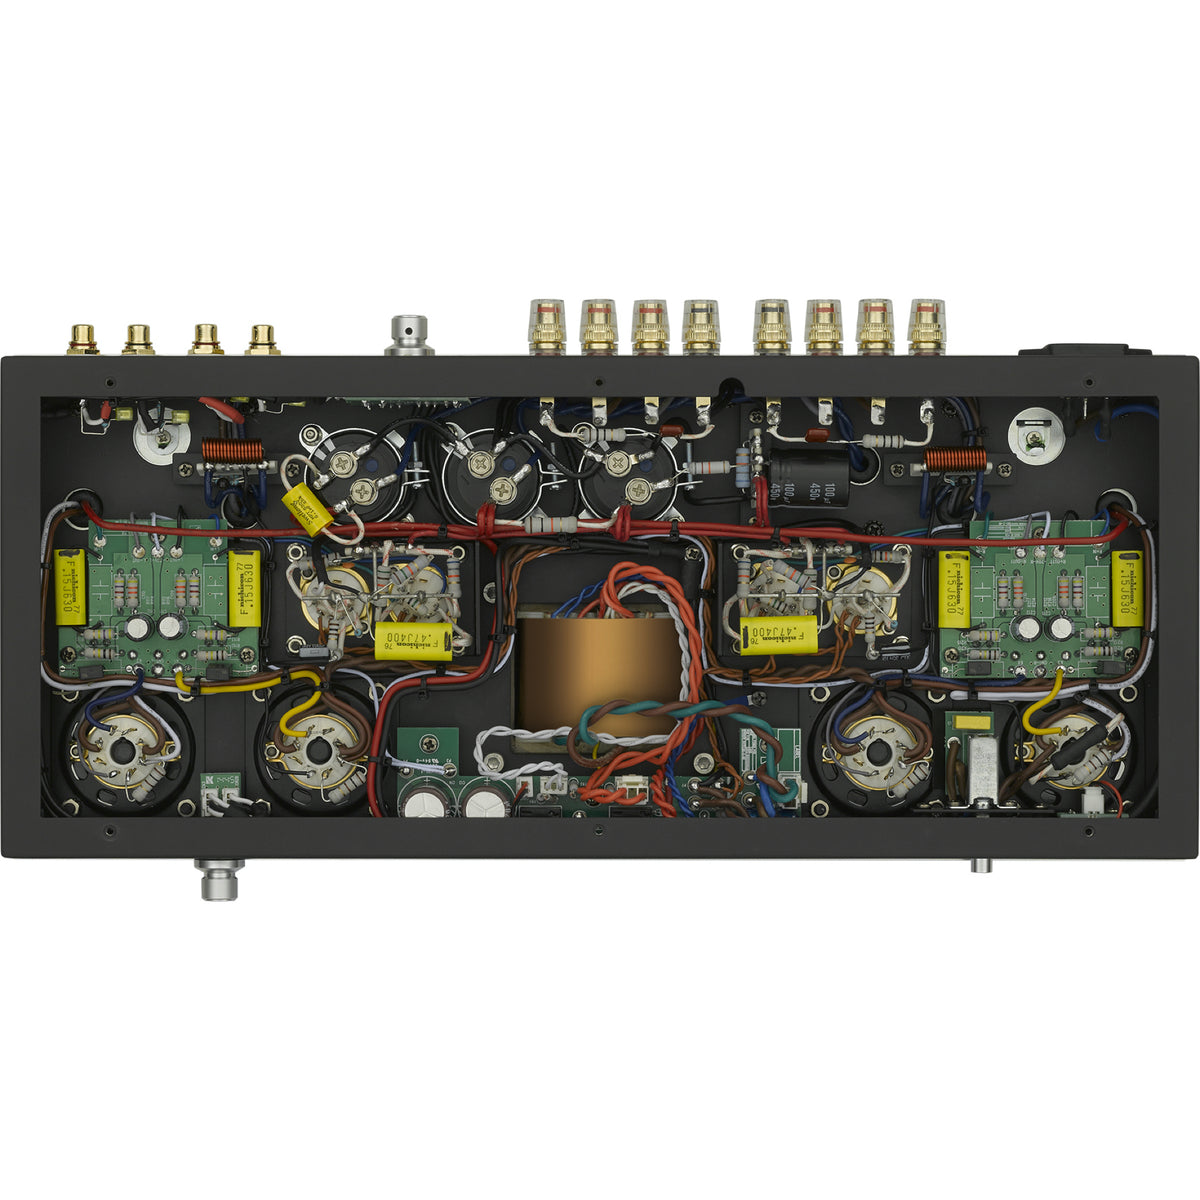 MQ-88uC Tube Stereo Amplifier